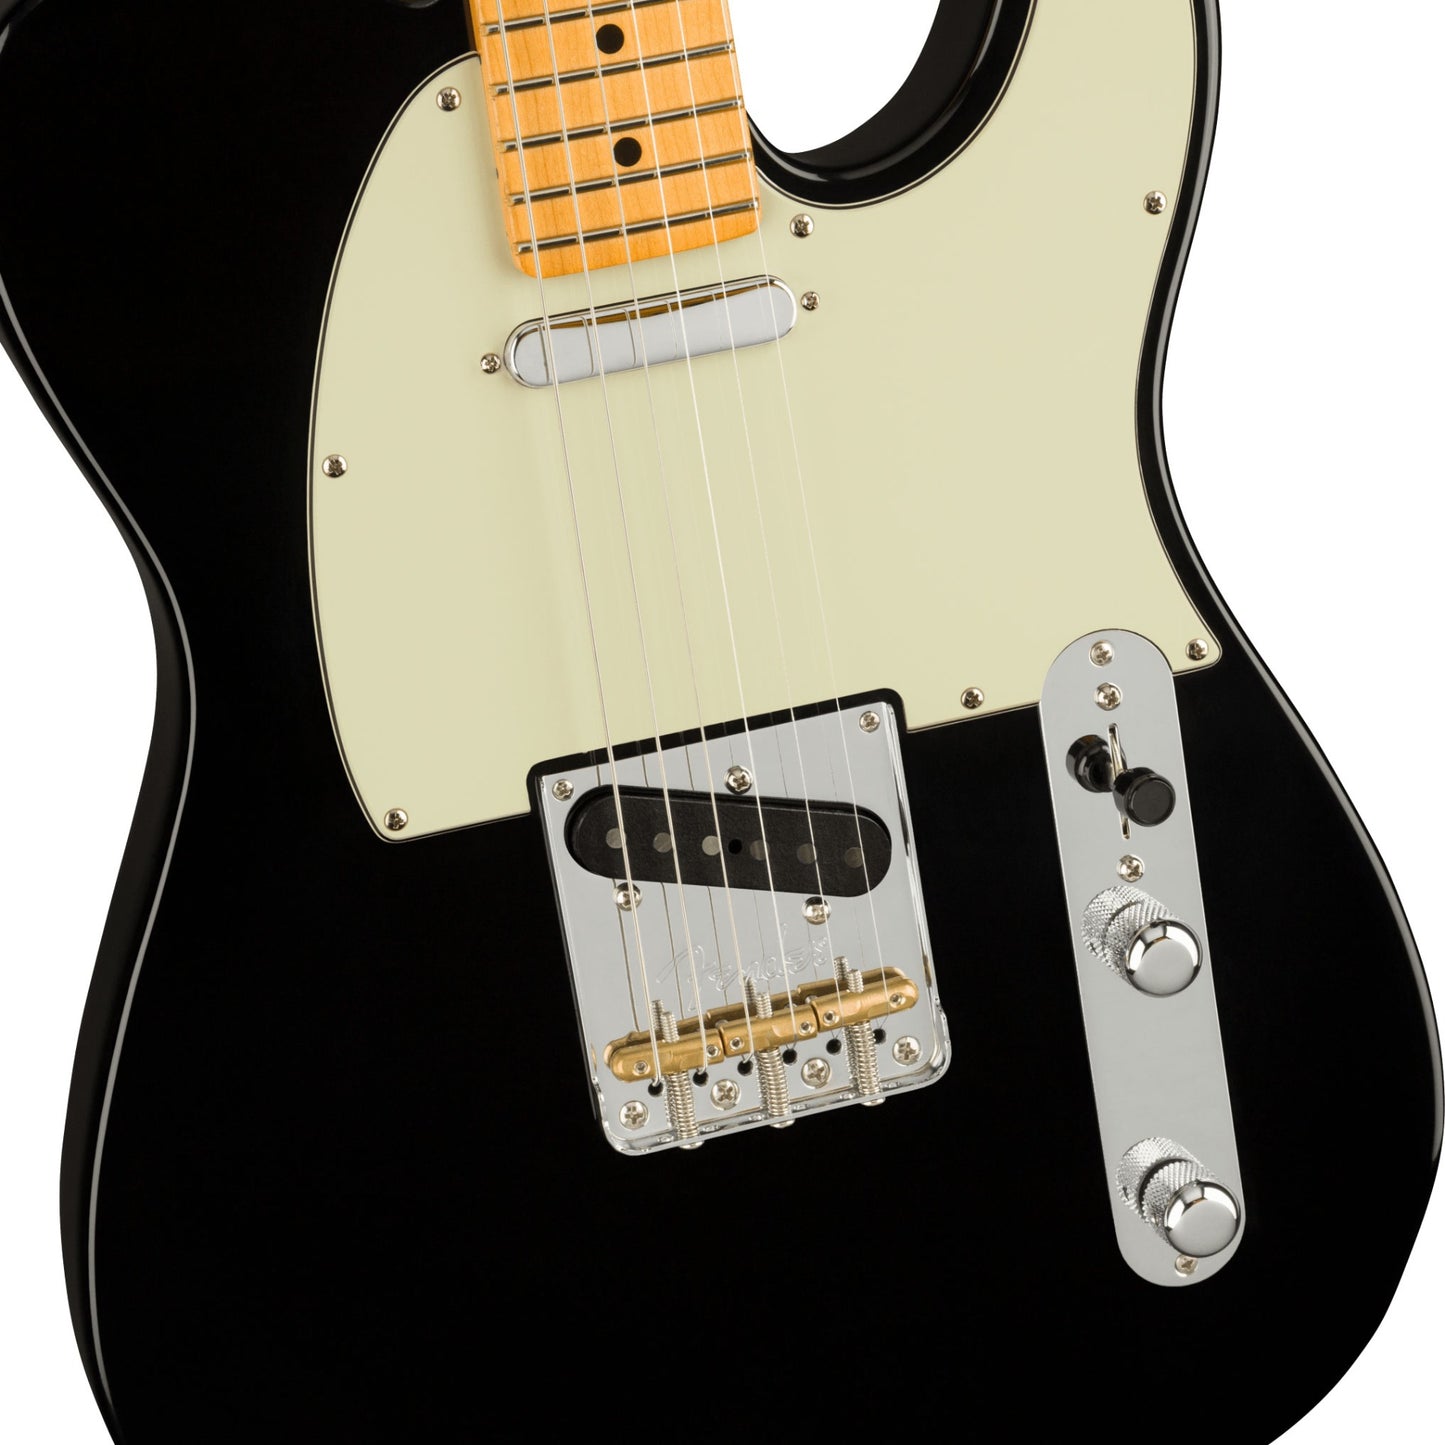 Fender American Professional II Telecaster Electric Guitar in Black